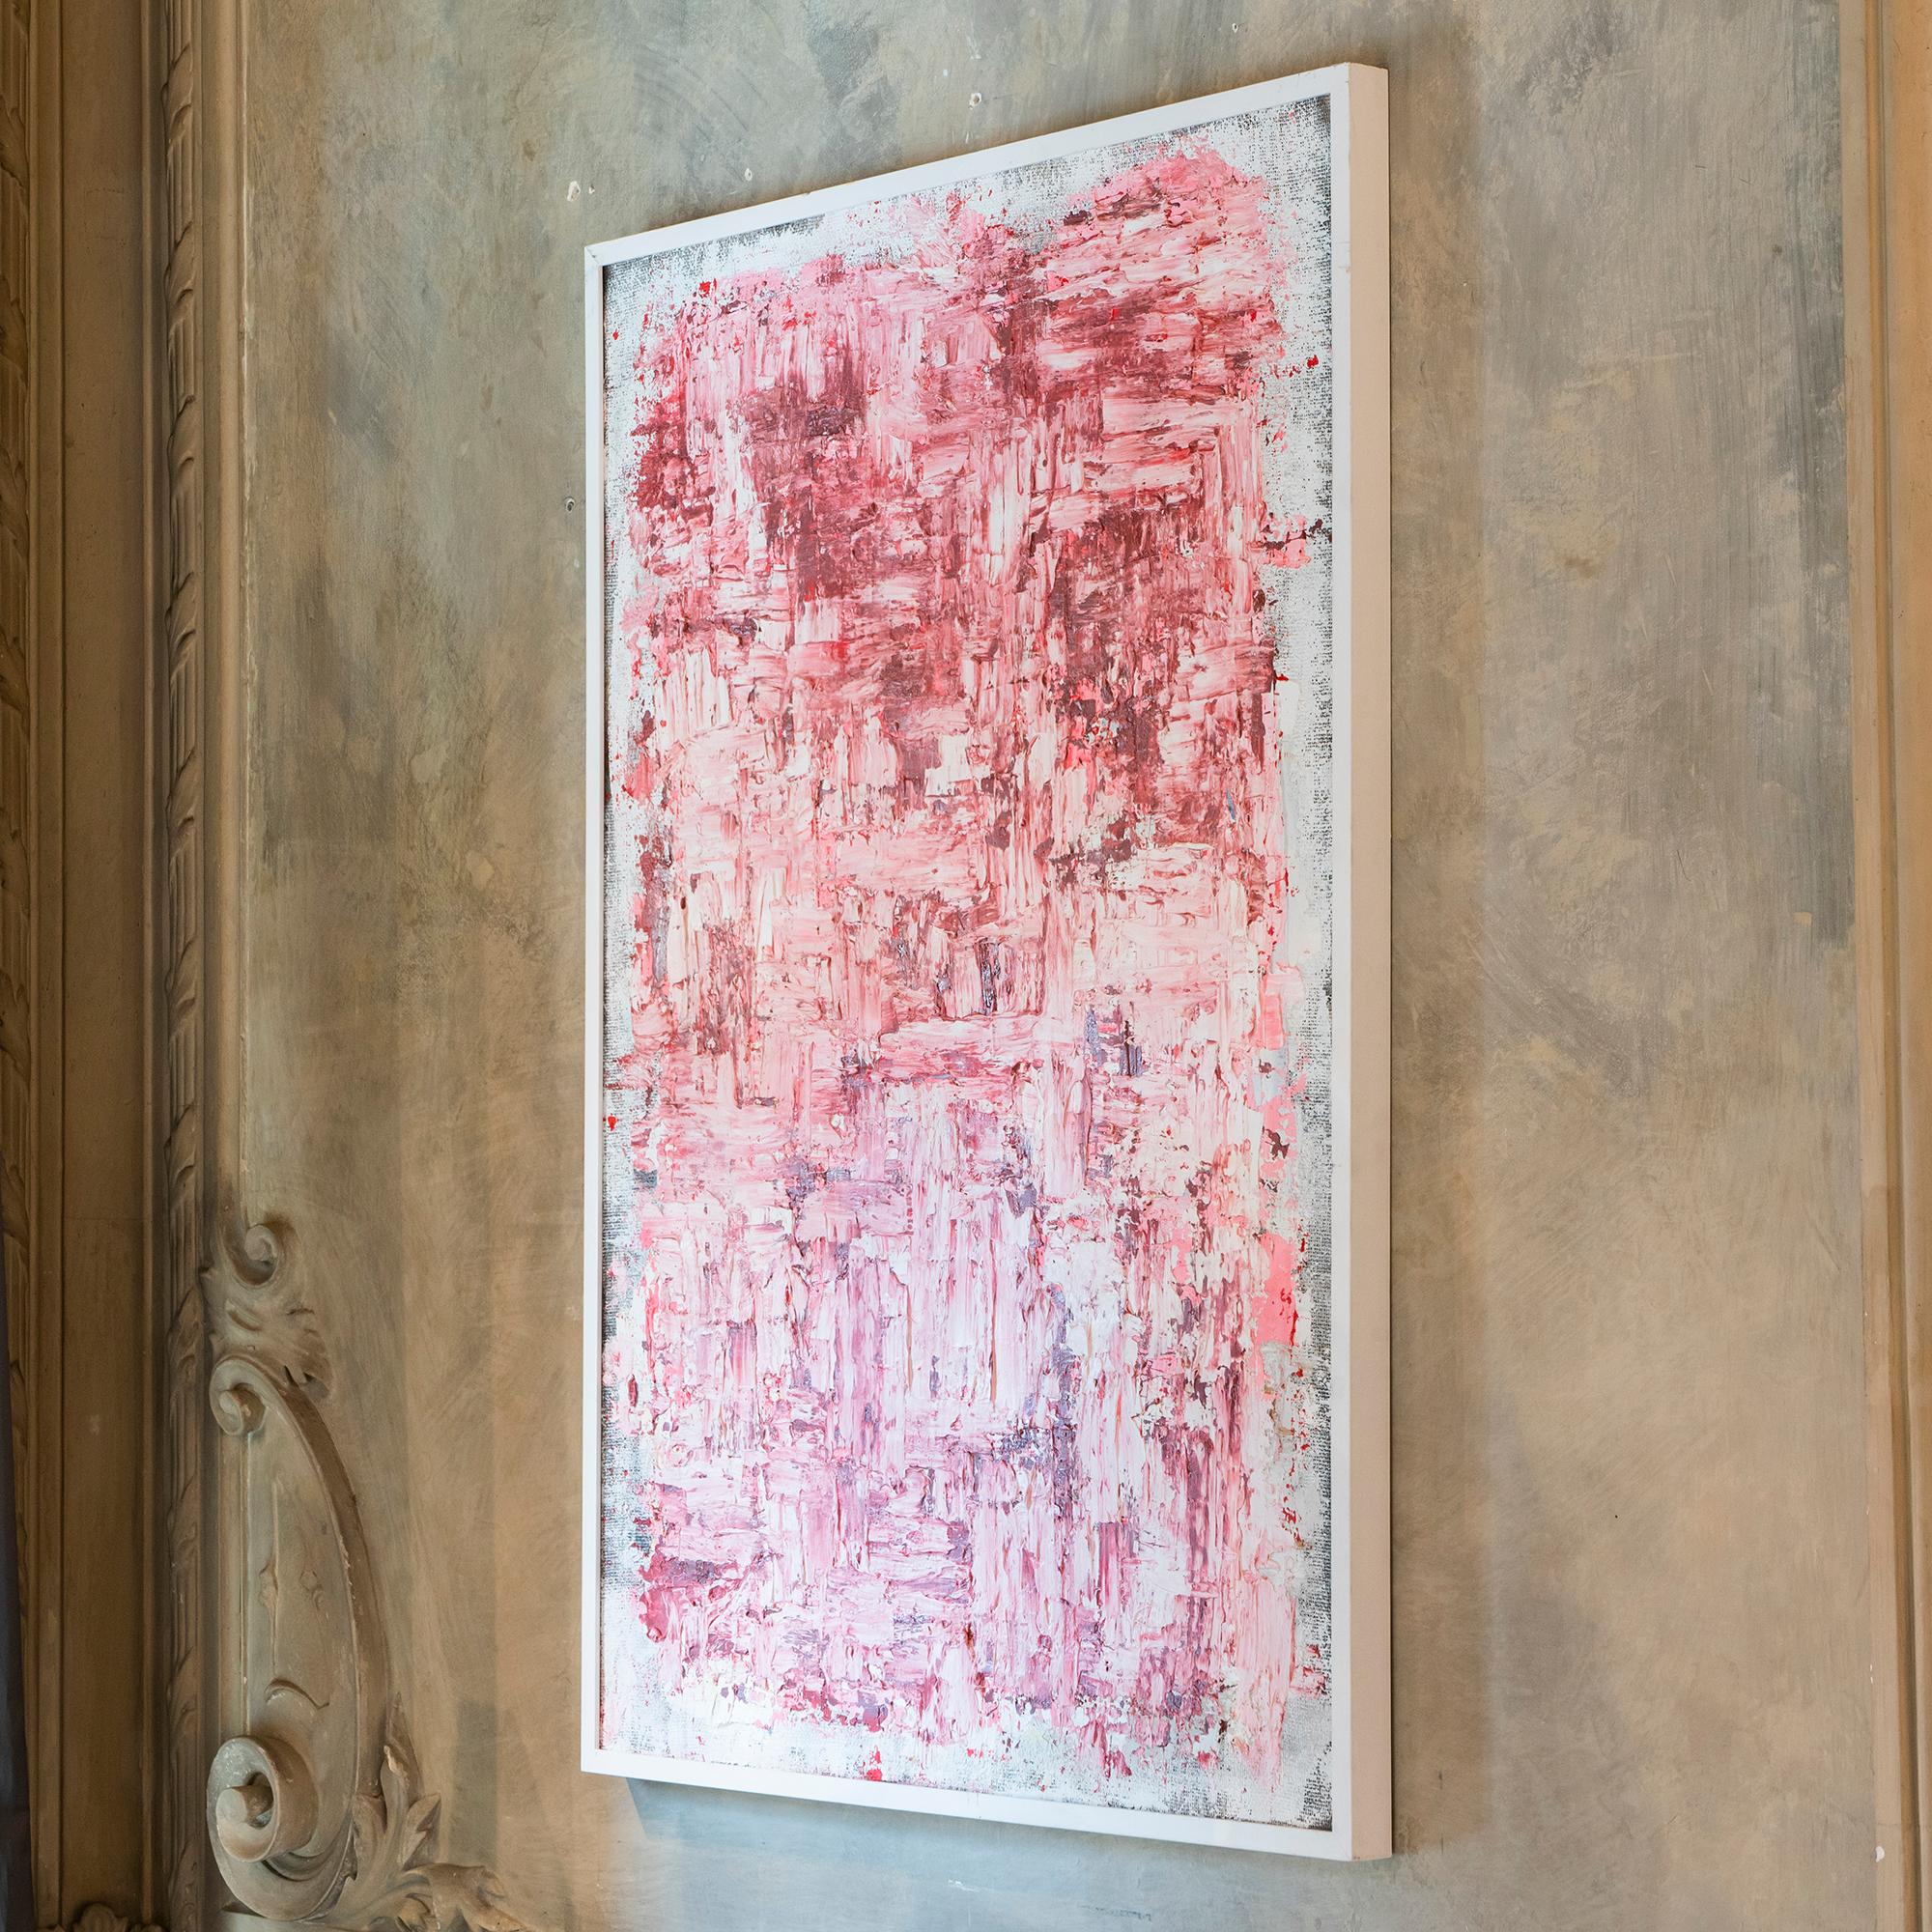 Abstract wall art, plaster acrylics on juta, wood frame, Marco Croce, Italy 2019.